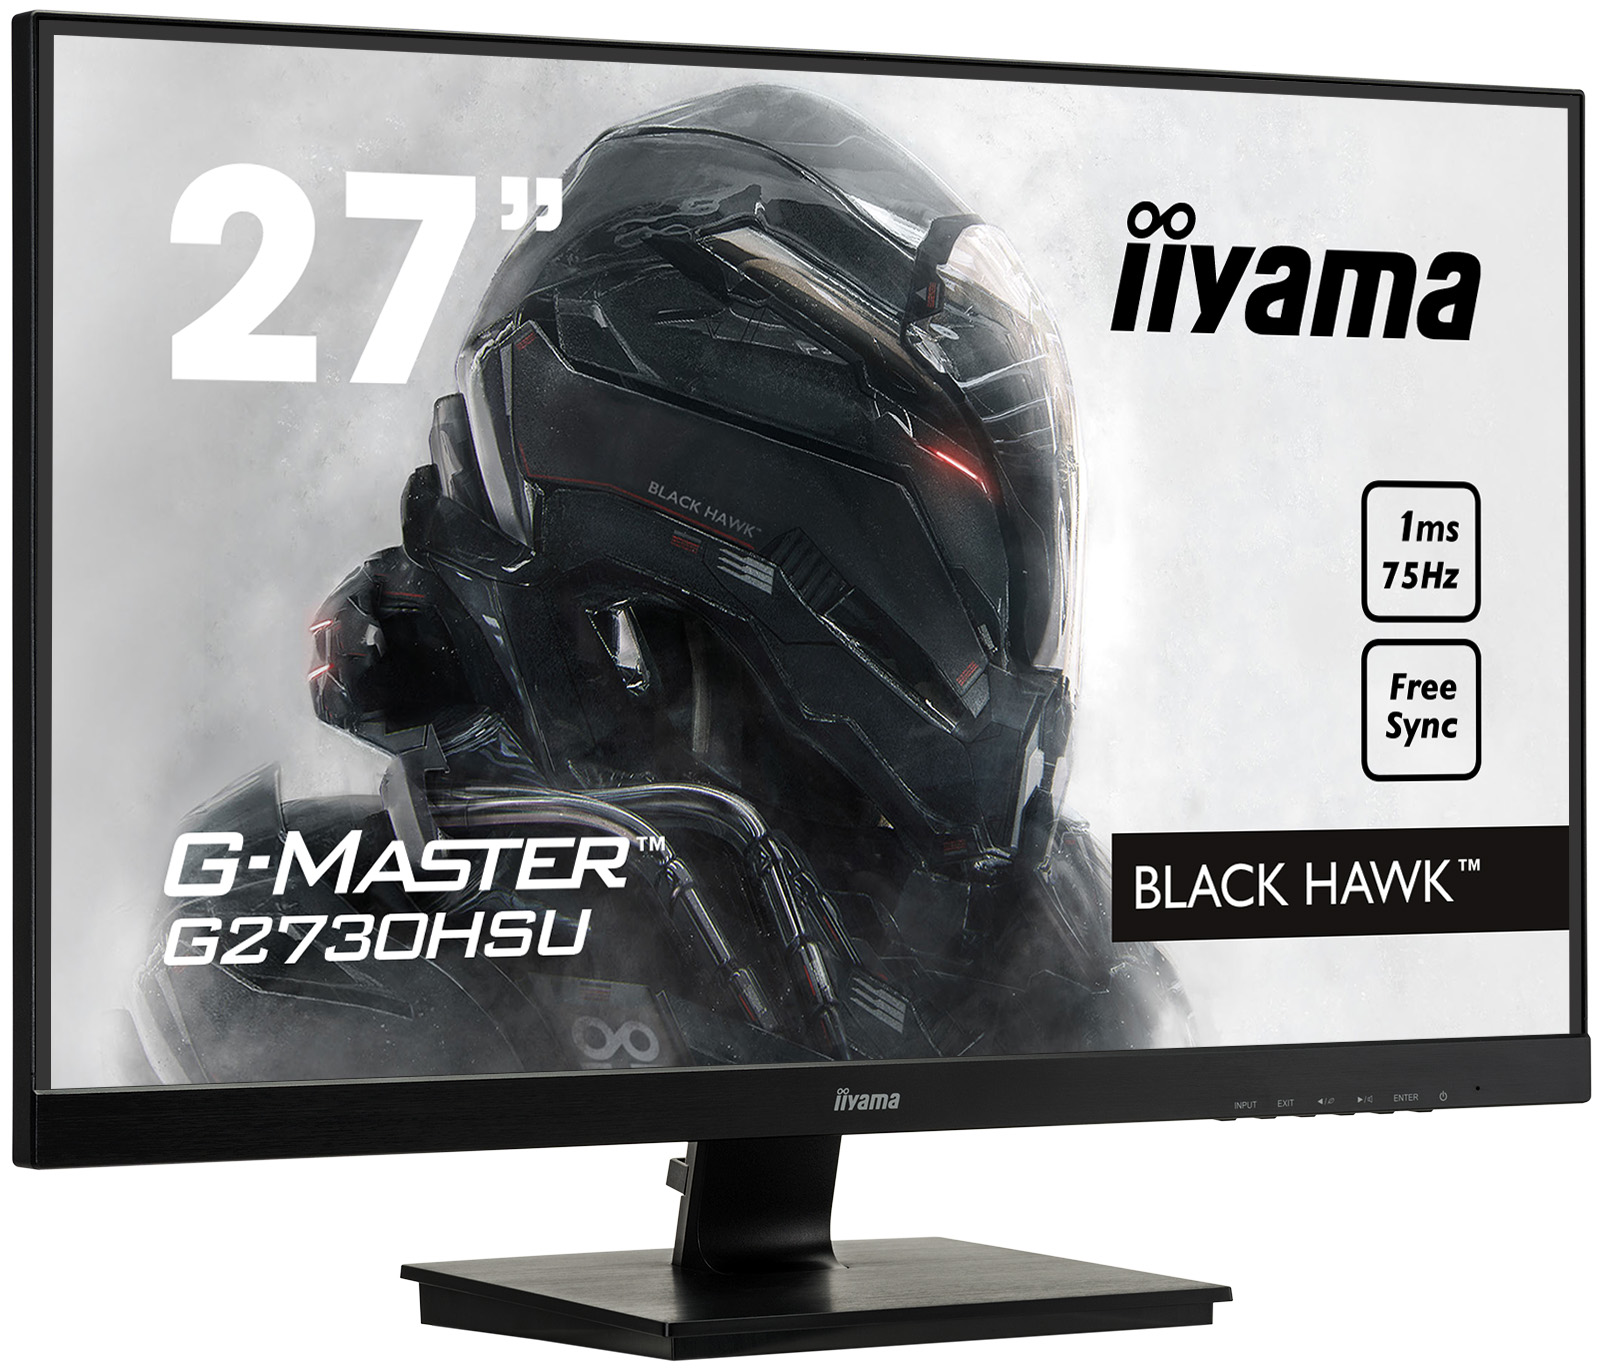 iiyama - G-MASTER G2730HSU-B1 Black Hawk – get in the game